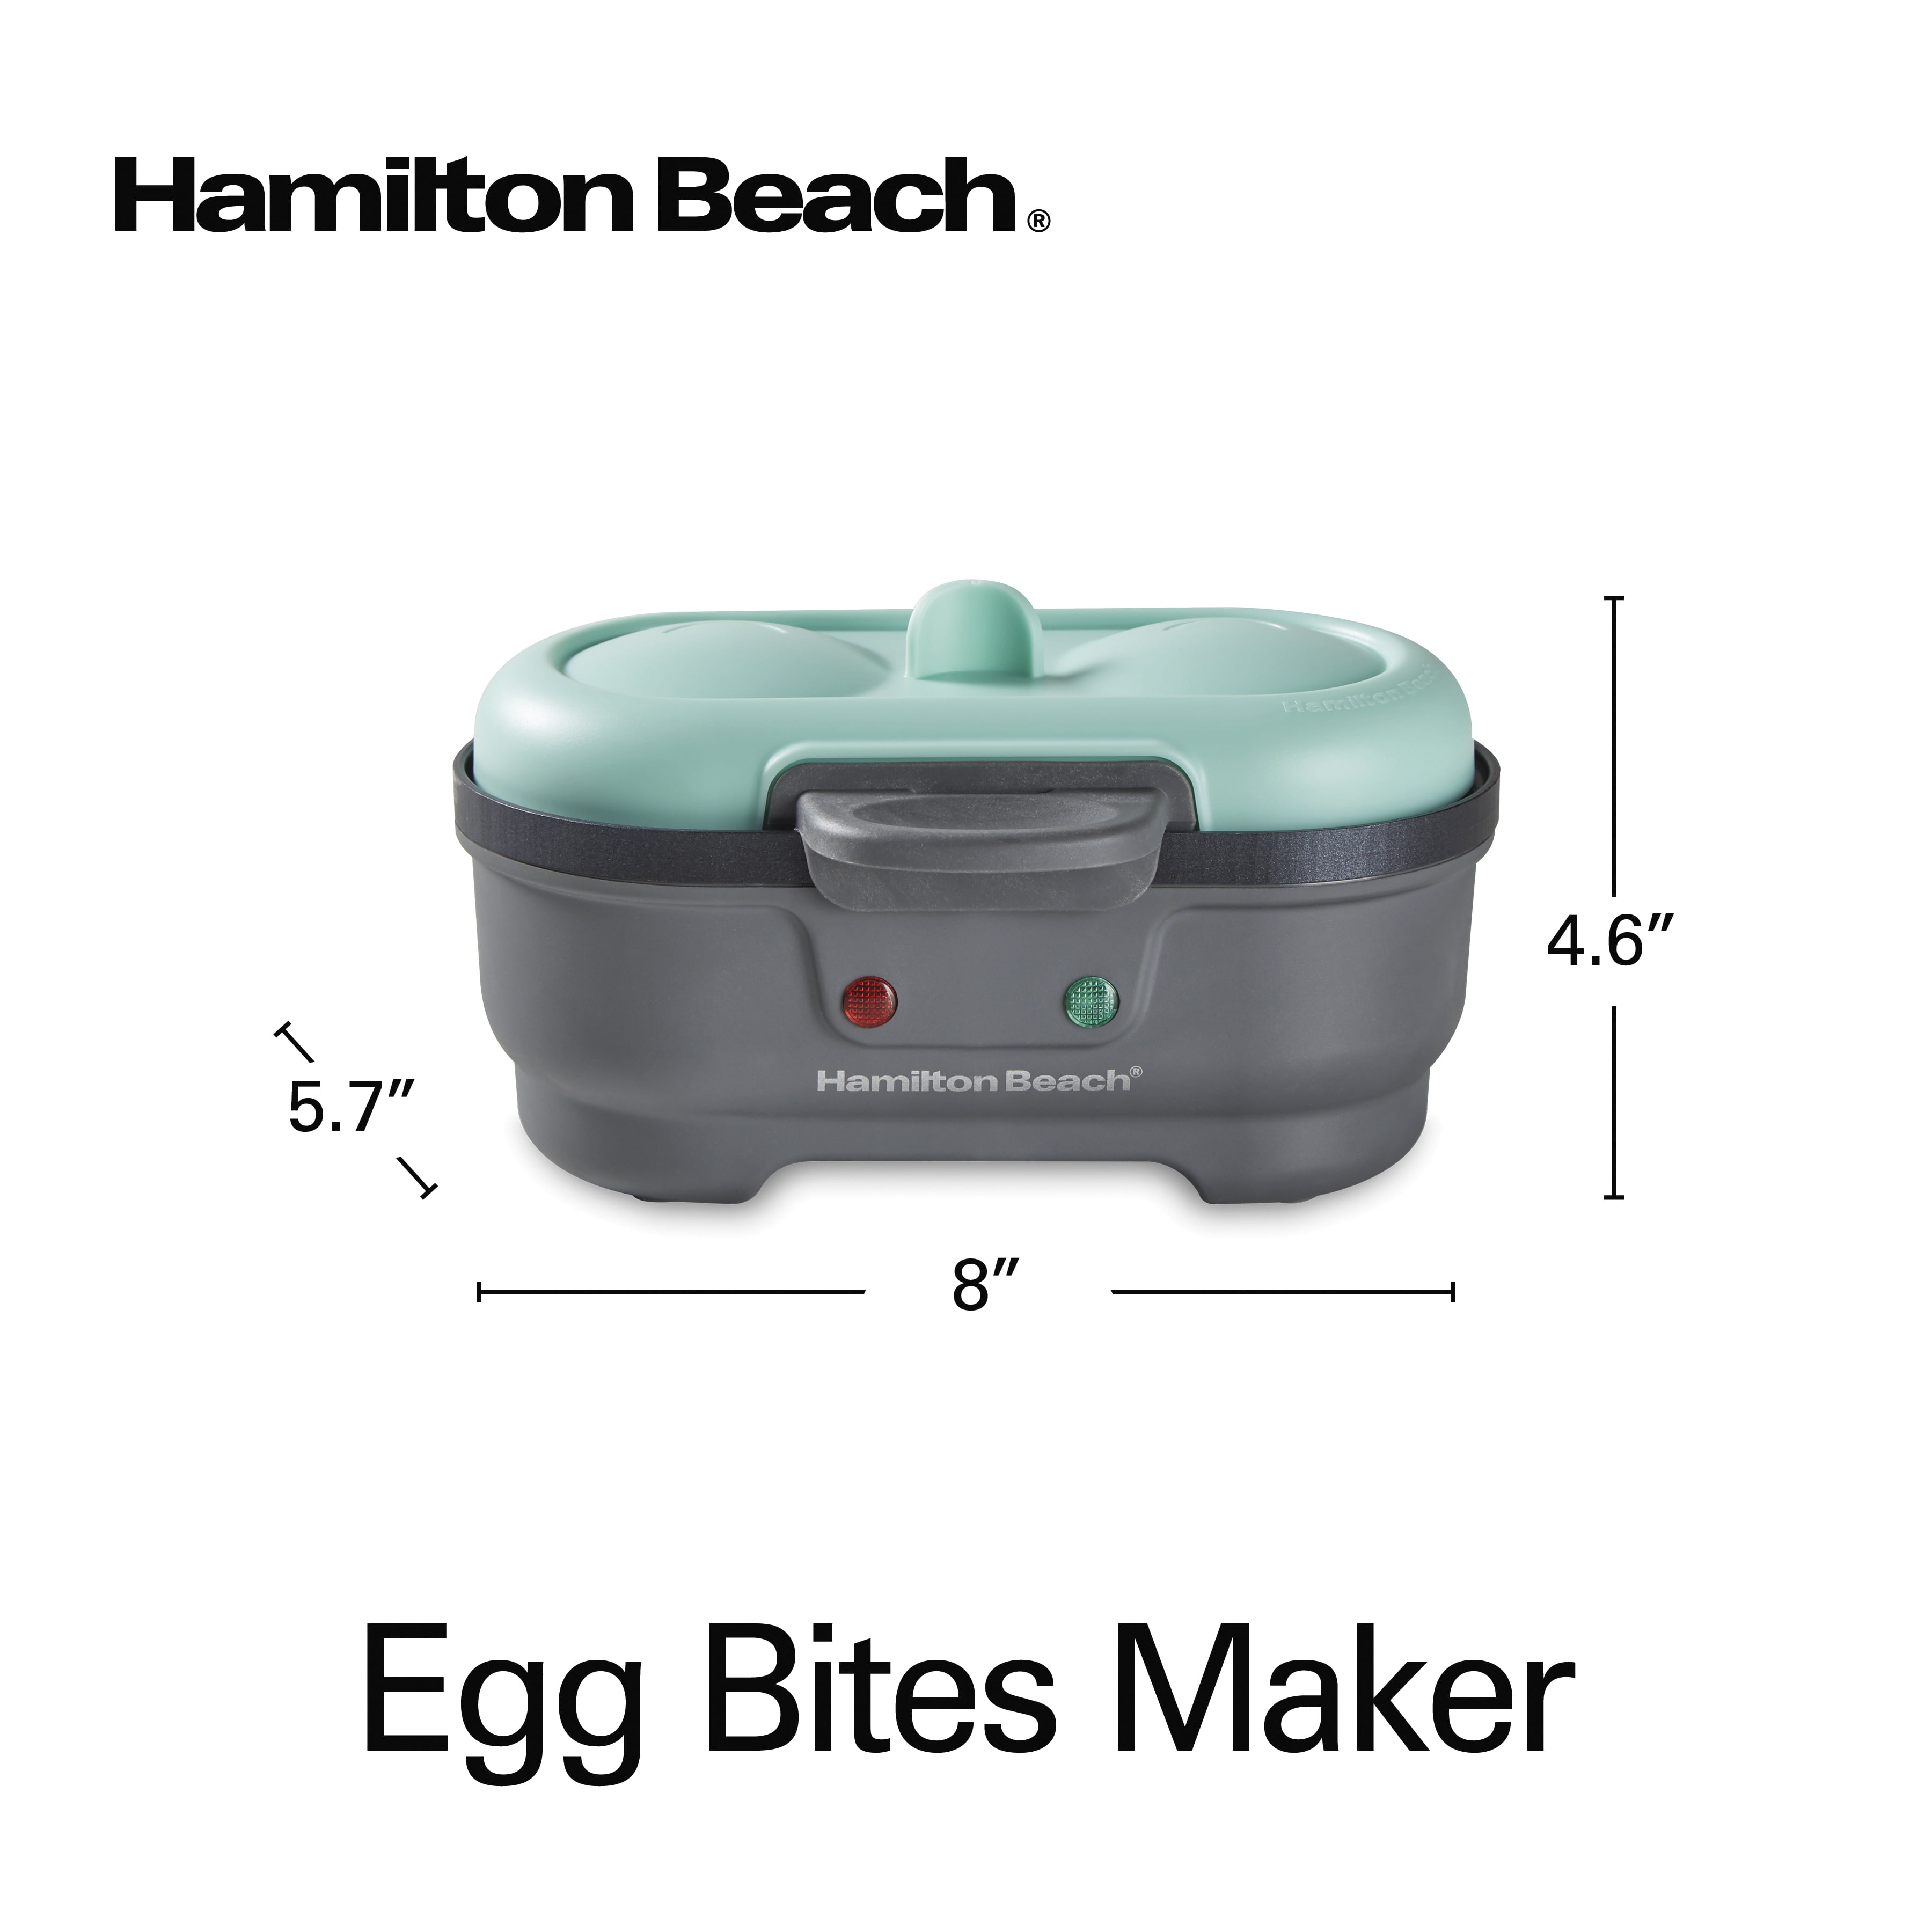 Hamilton Beach Electric Egg Bites Maker Tested ⭐ Cooking Gizmos 